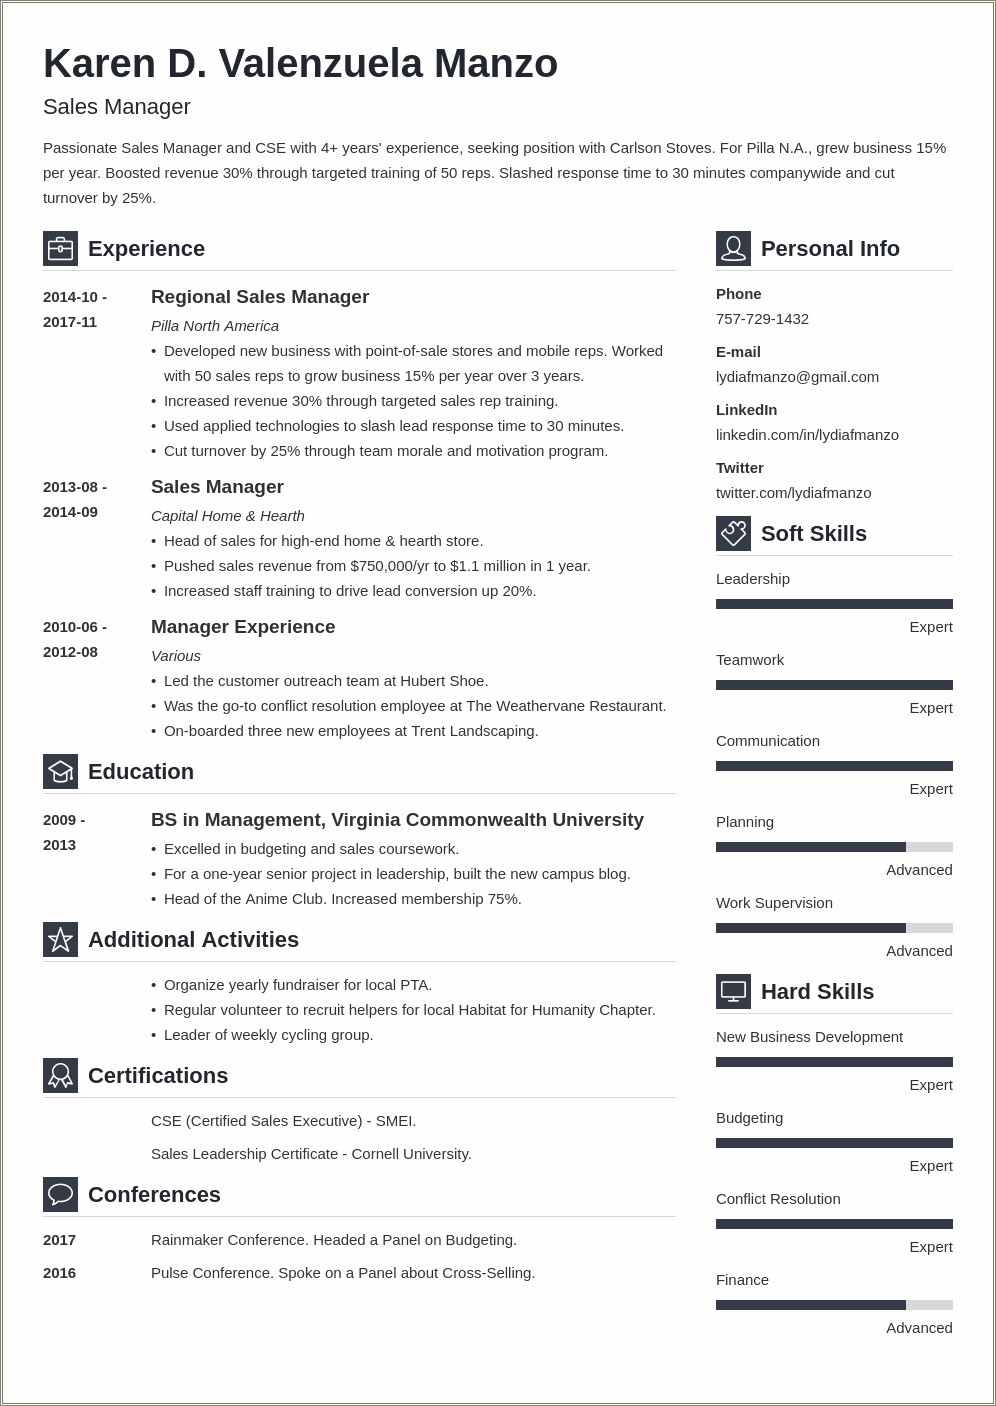 capstone-my-first-job-resume-printable-worksheet-pdf-resume-example